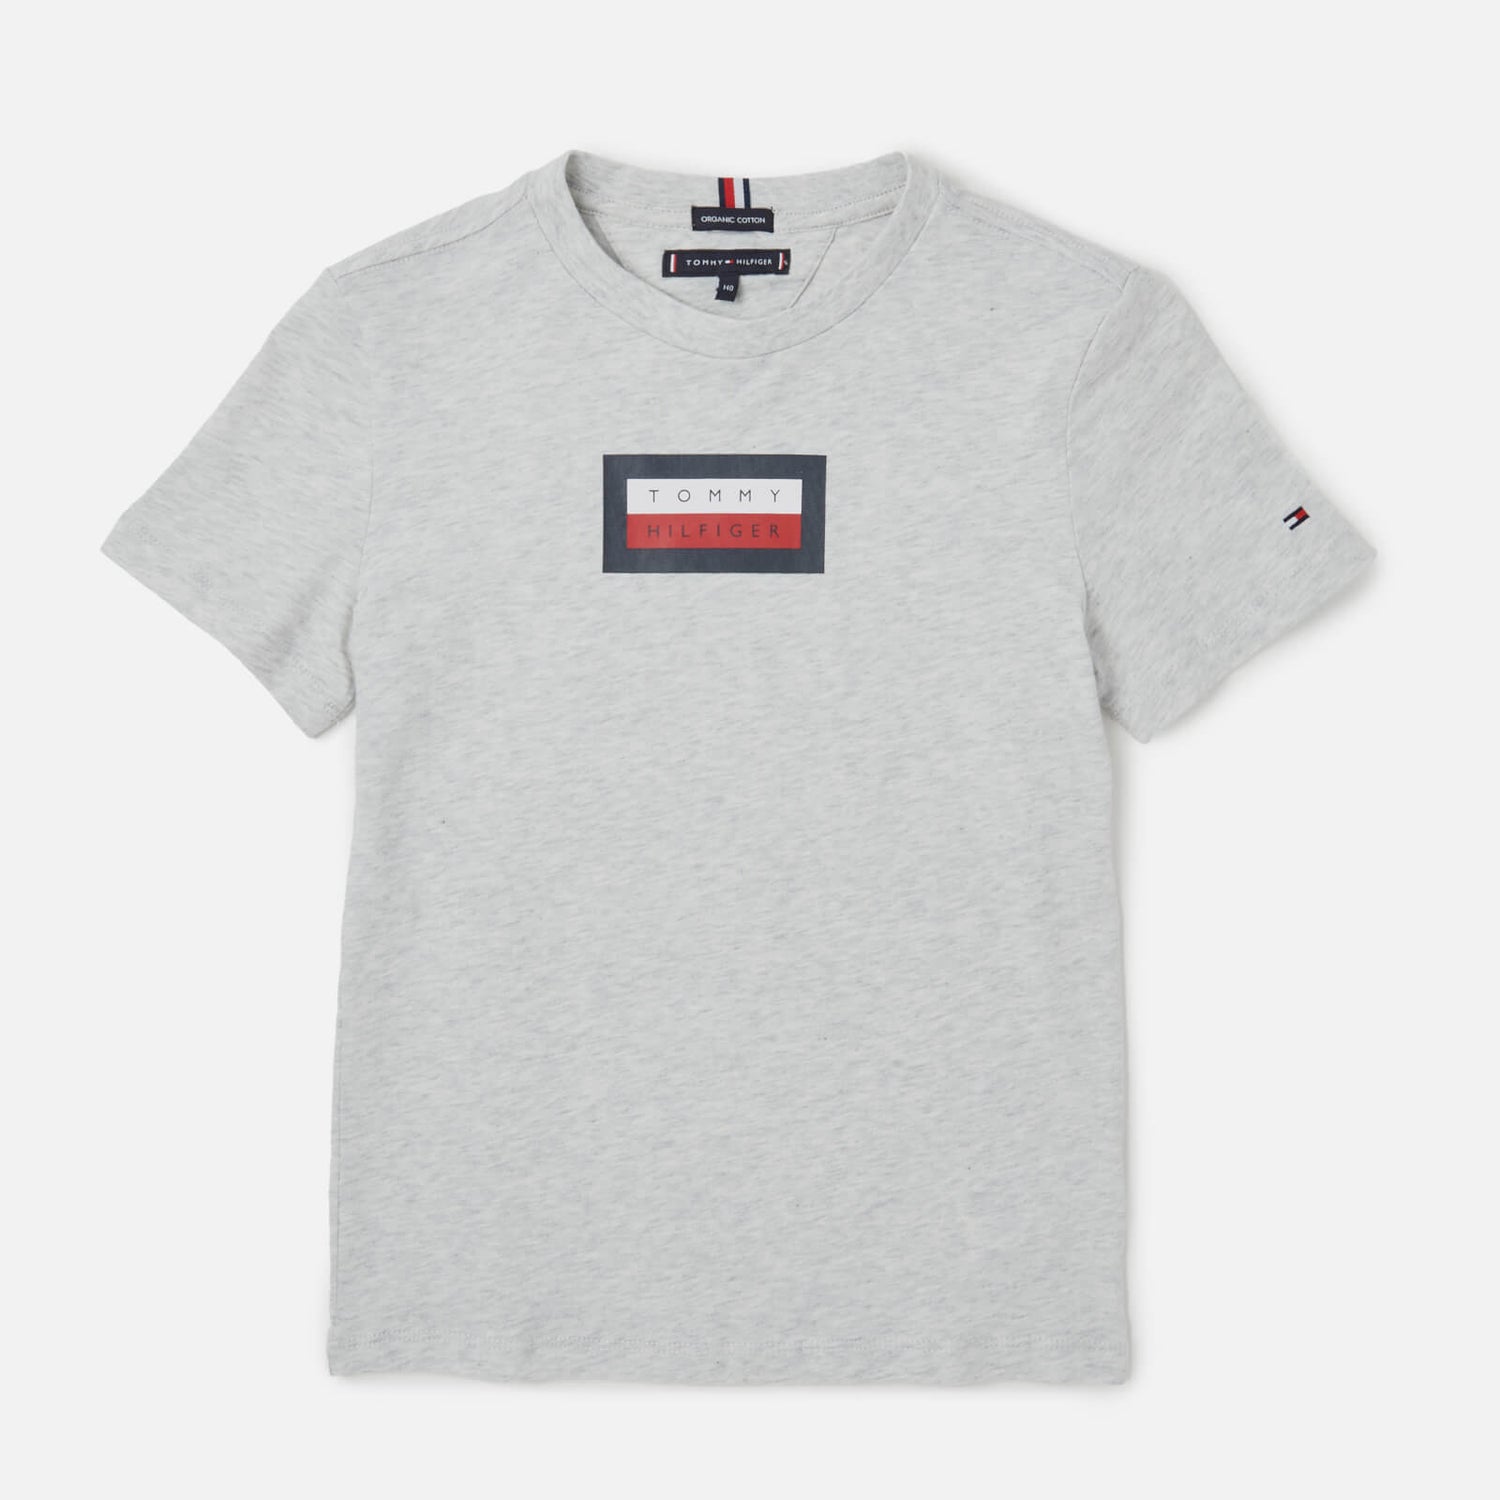 Tommy Hilfiger Boys' Hilfiger Graphic T-Shirt - Light Grey Heather